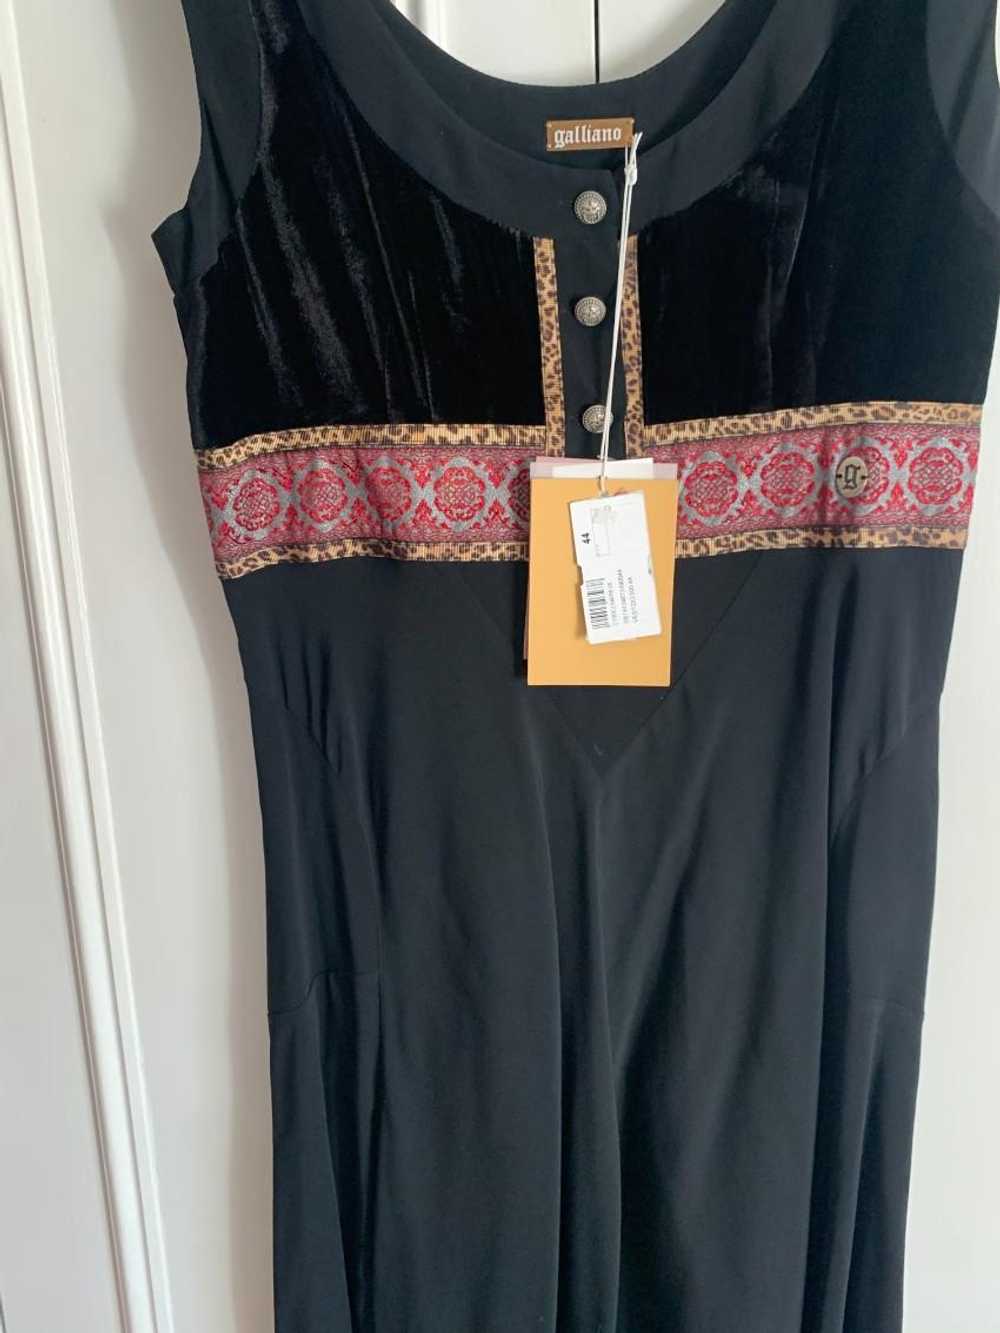 Galliano Galliano Black Satin Embroidered Dress - image 7